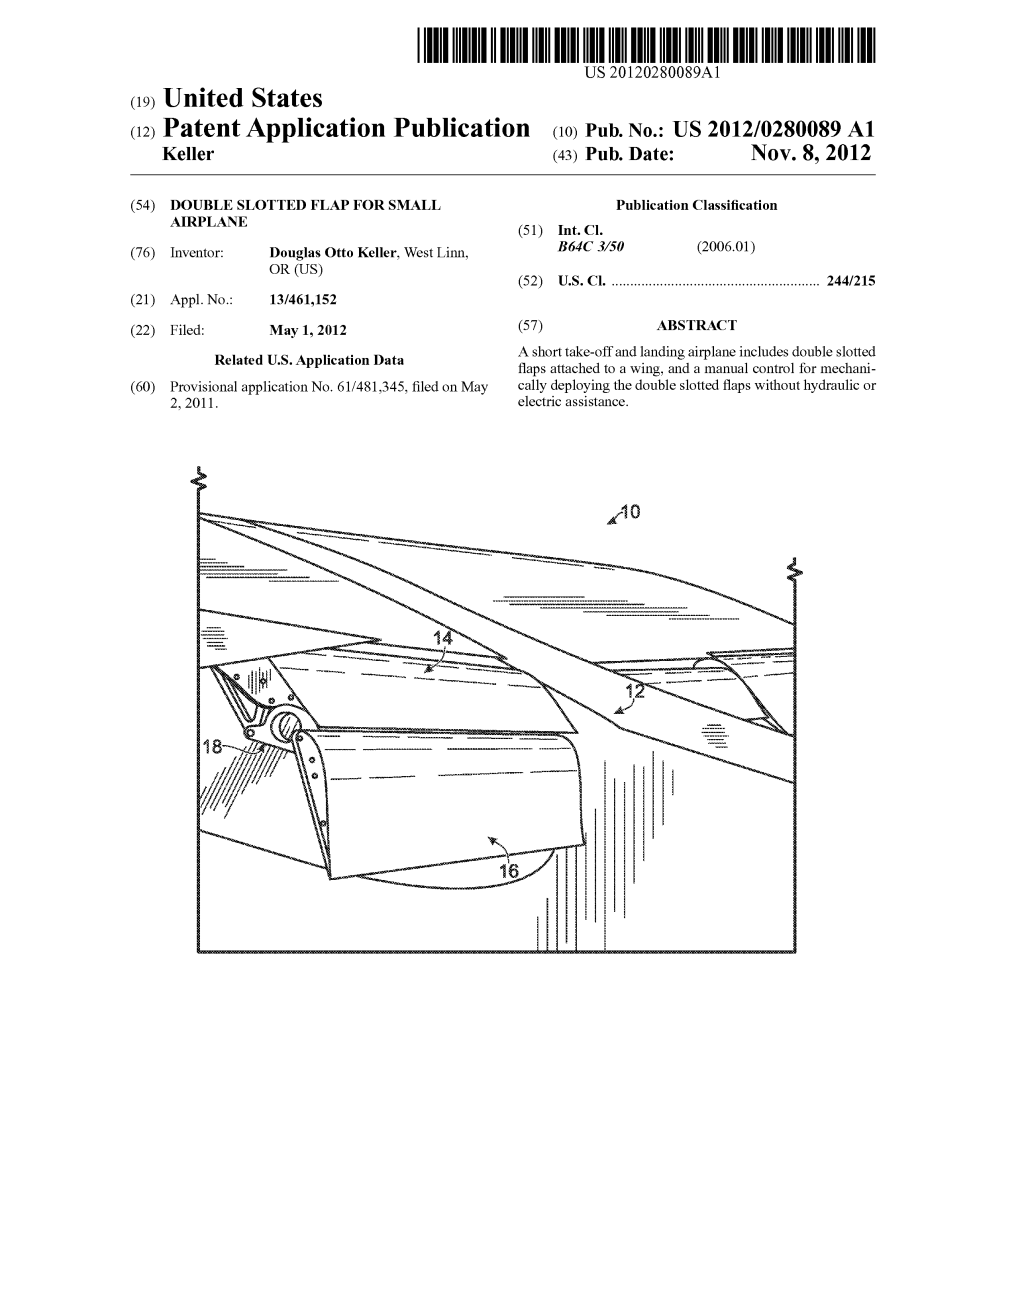 (2) Patent Application Publication (10) Pub. No.: US 2012/0280089 A1 Keller (43) Pub